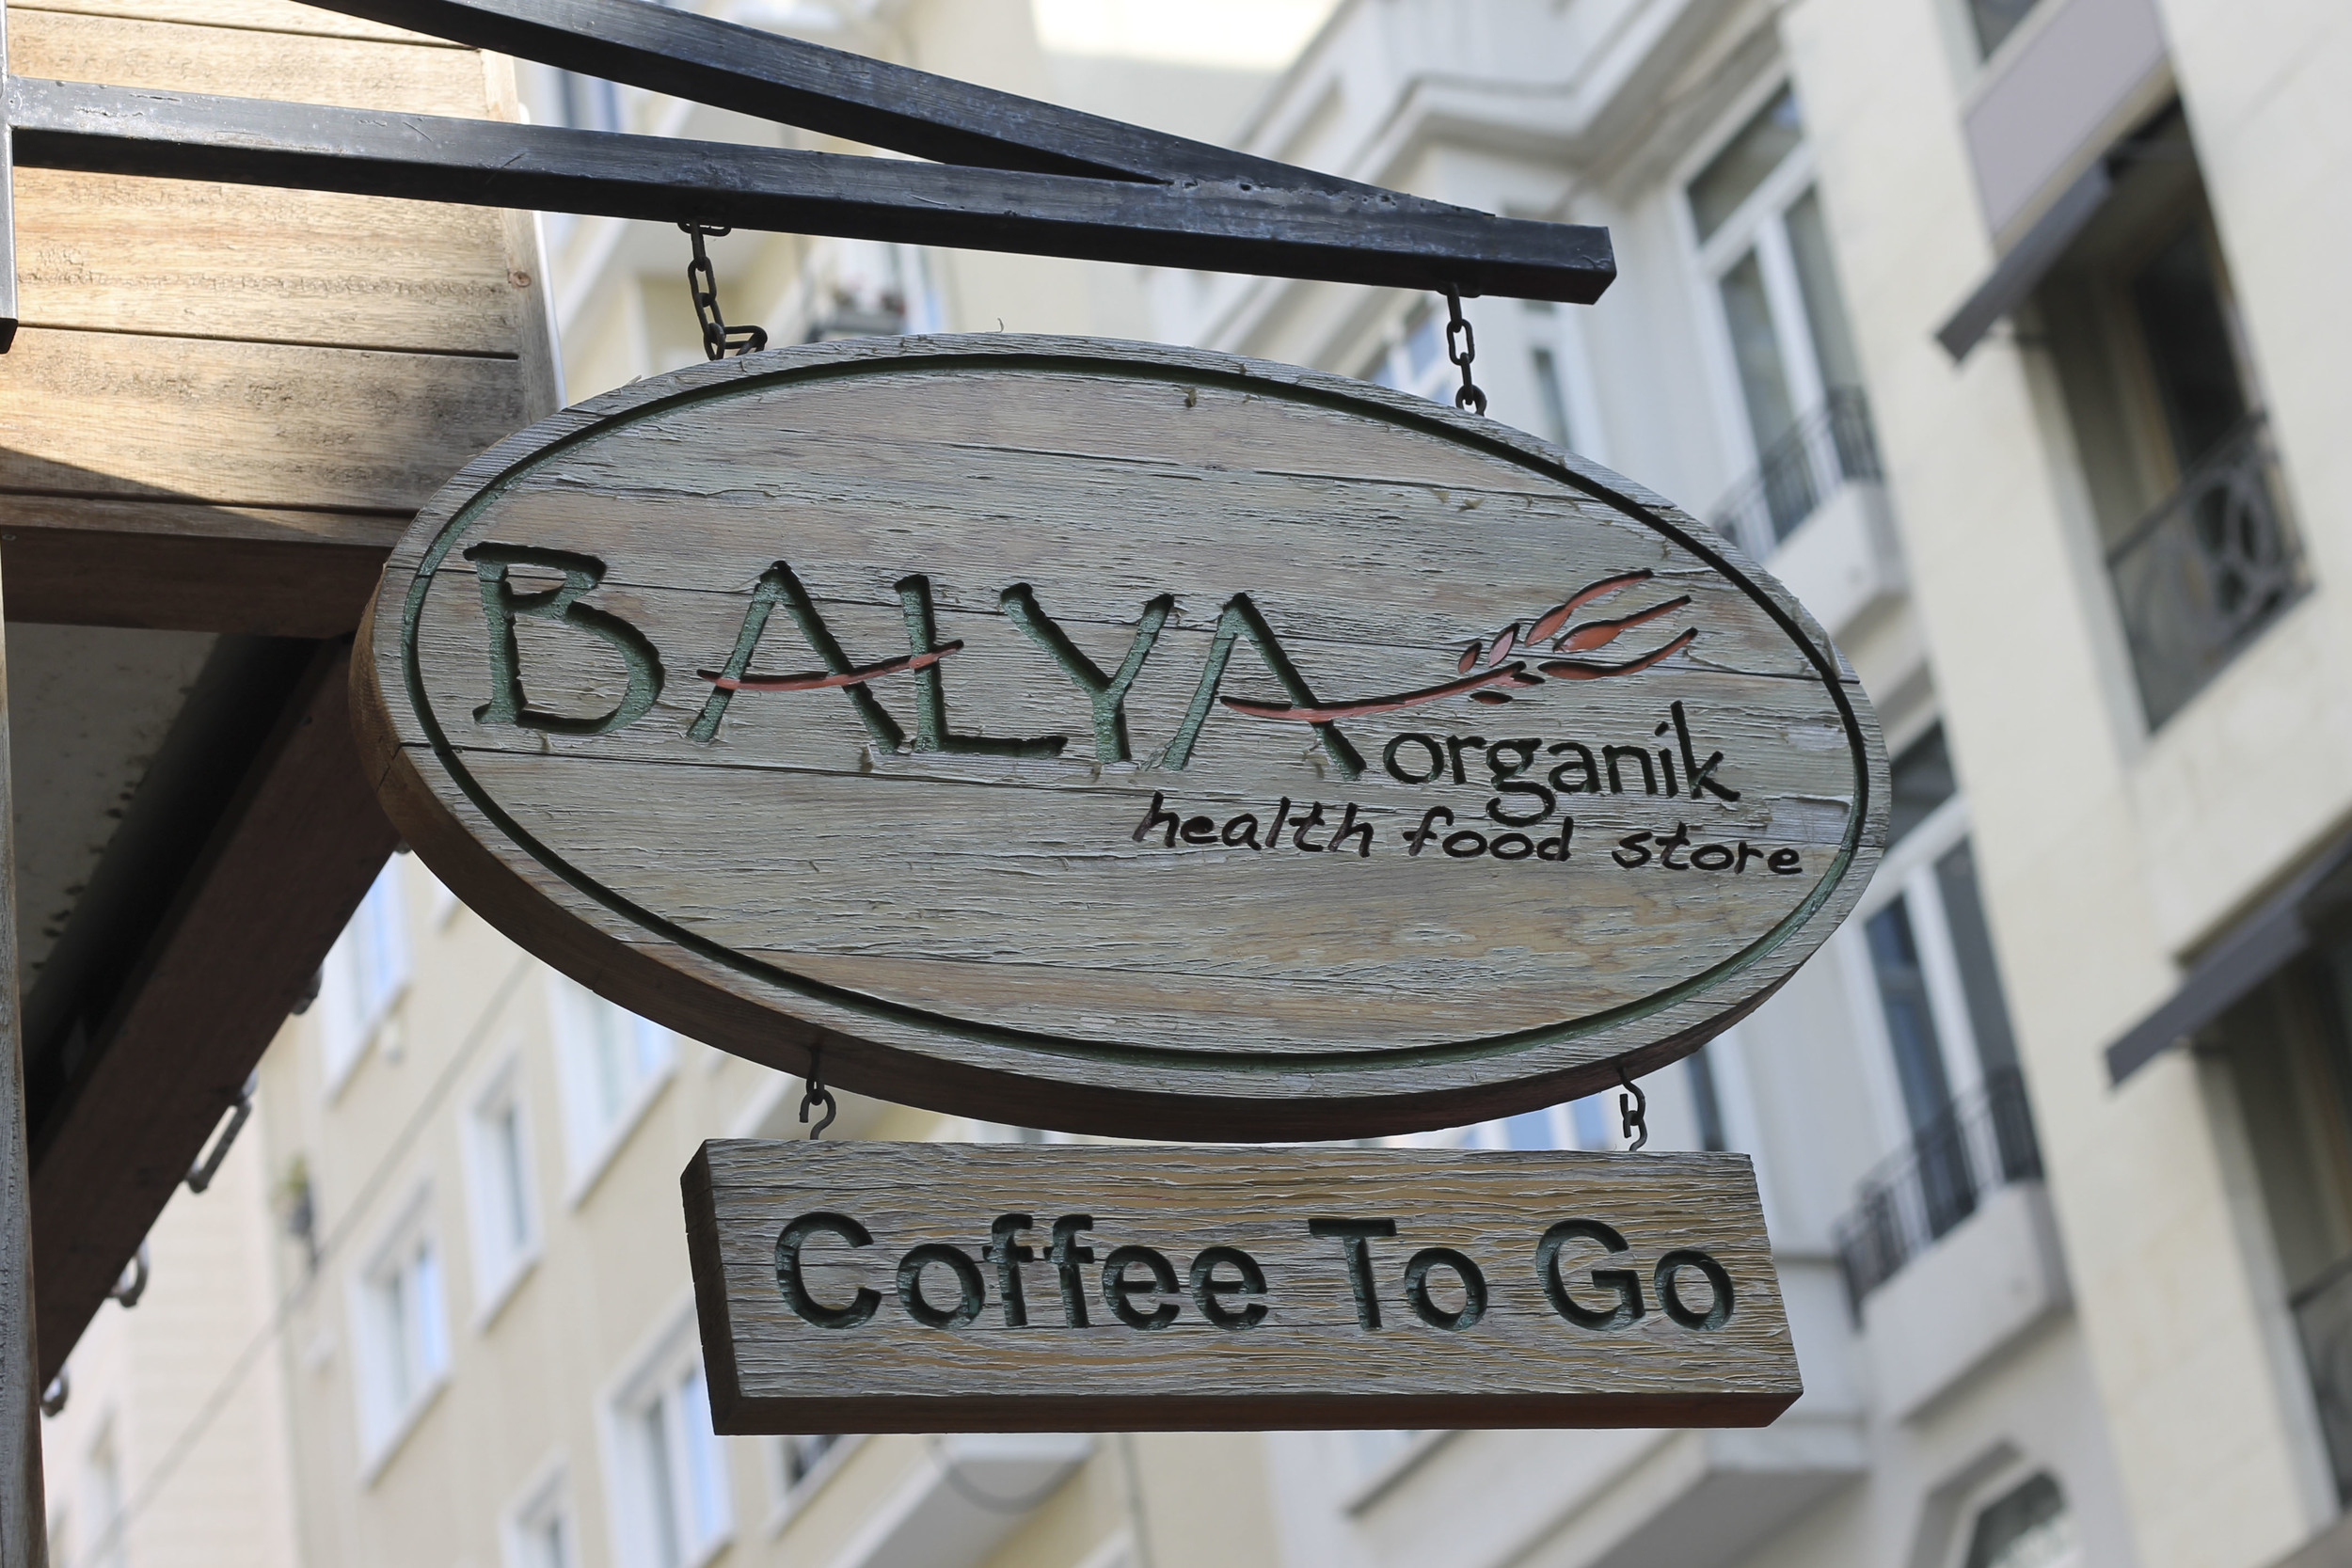 Balya oganic health food store, cihangir, istanbul2904.jpg